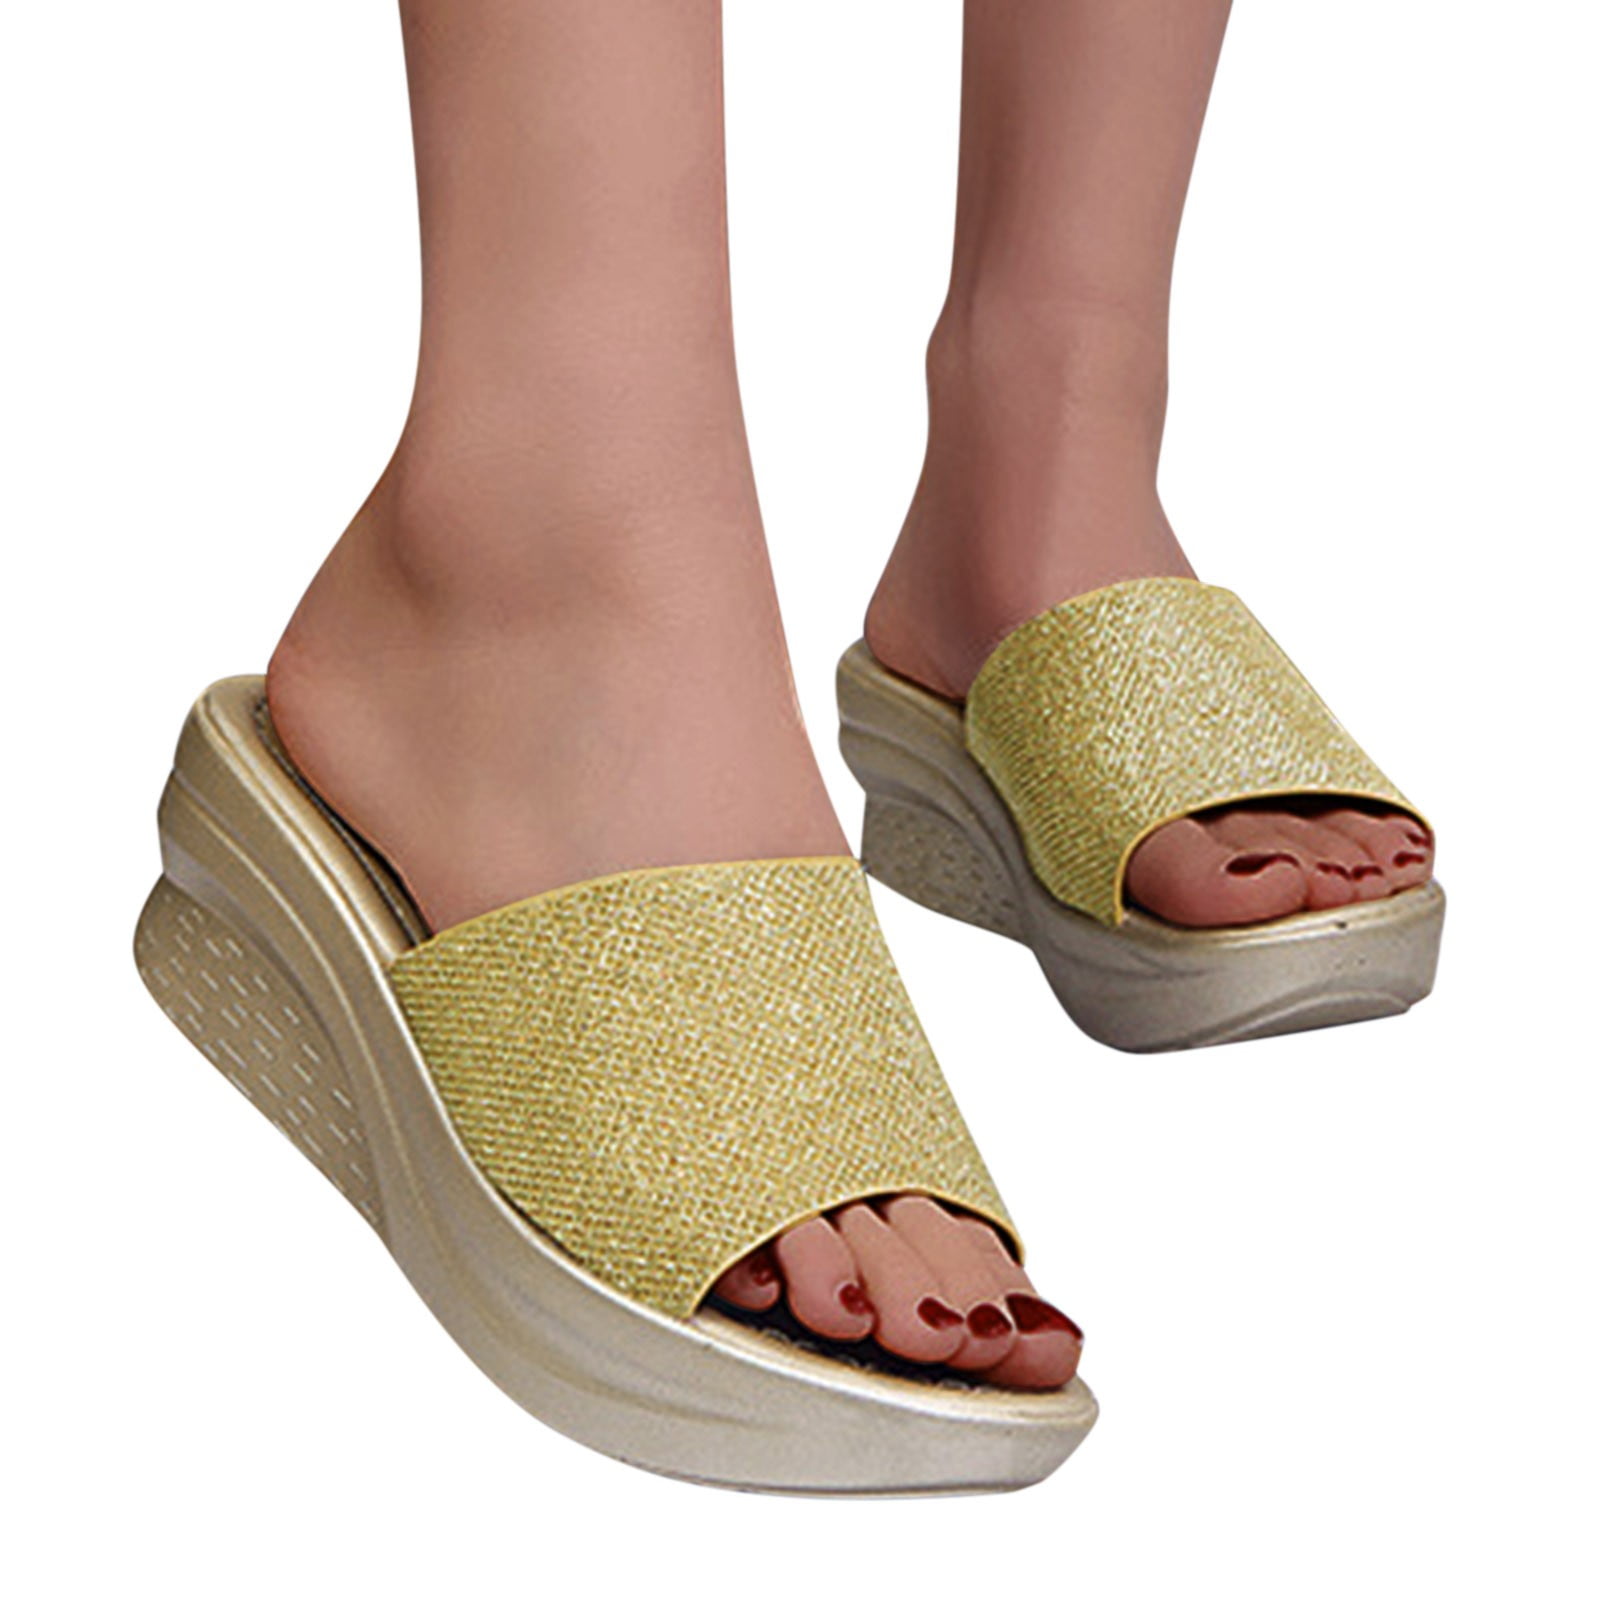 eczipvz Shoes for Women Womens Wedges Dressy Women's Cross Strap Wedge  Sandals Summer Espadrilles Ankle Strap Buckle Platform Sandals,Gold